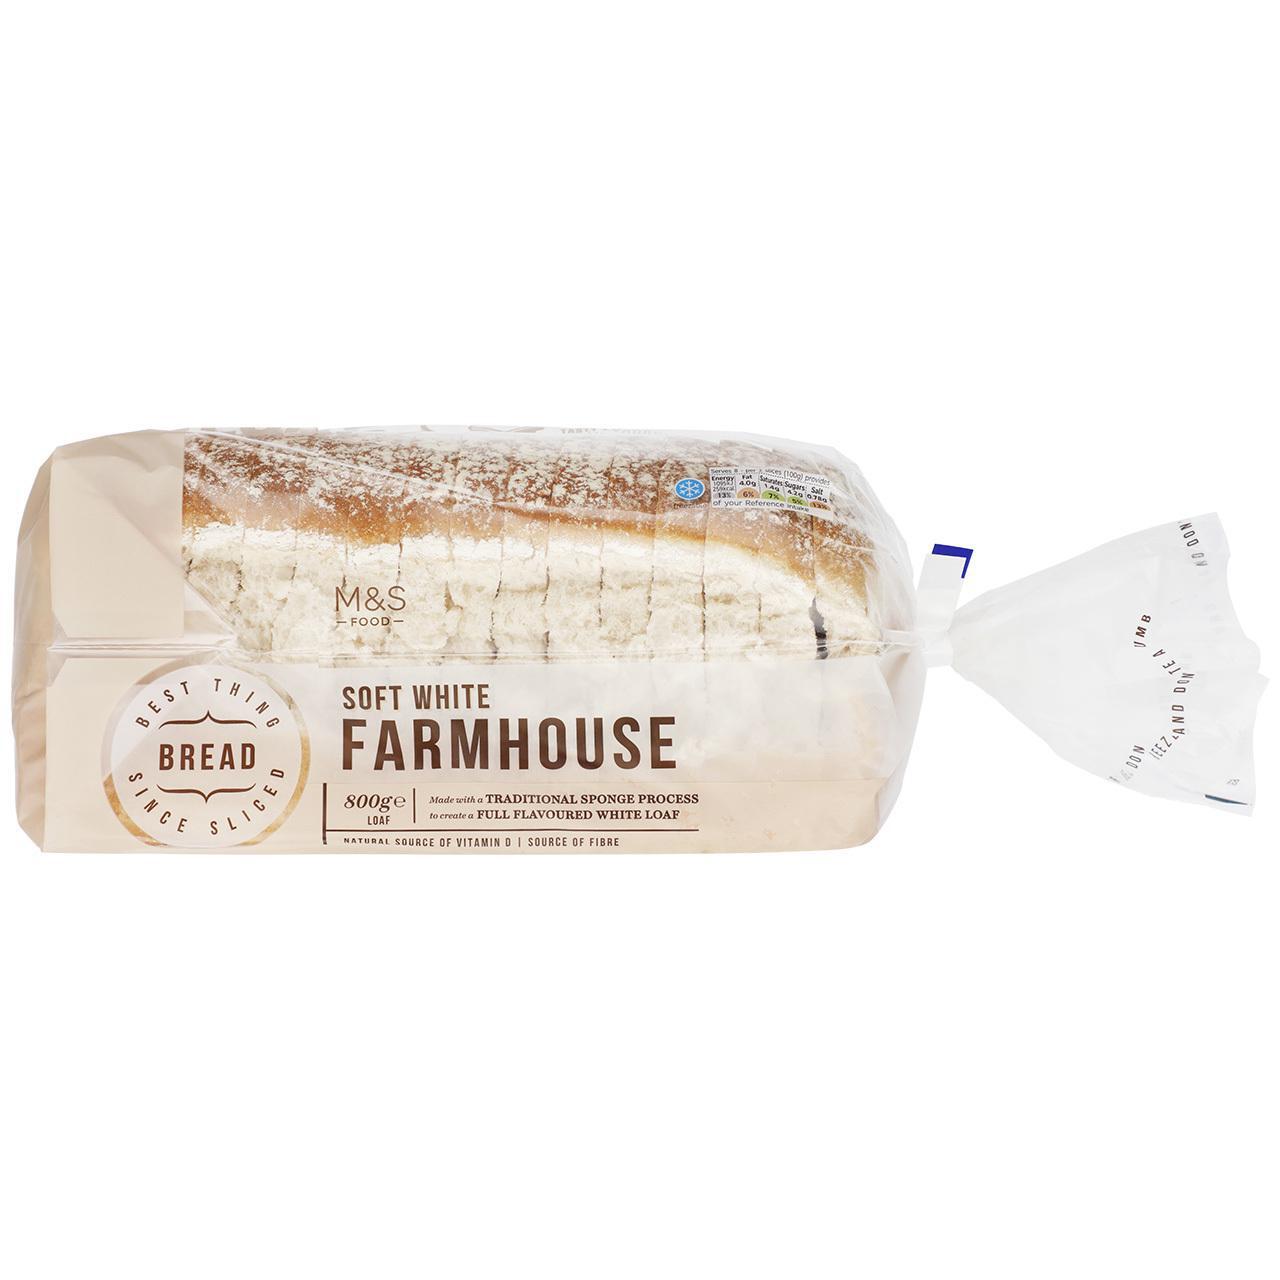 M&S Soft White Farmhouse Bread Loaf 800g